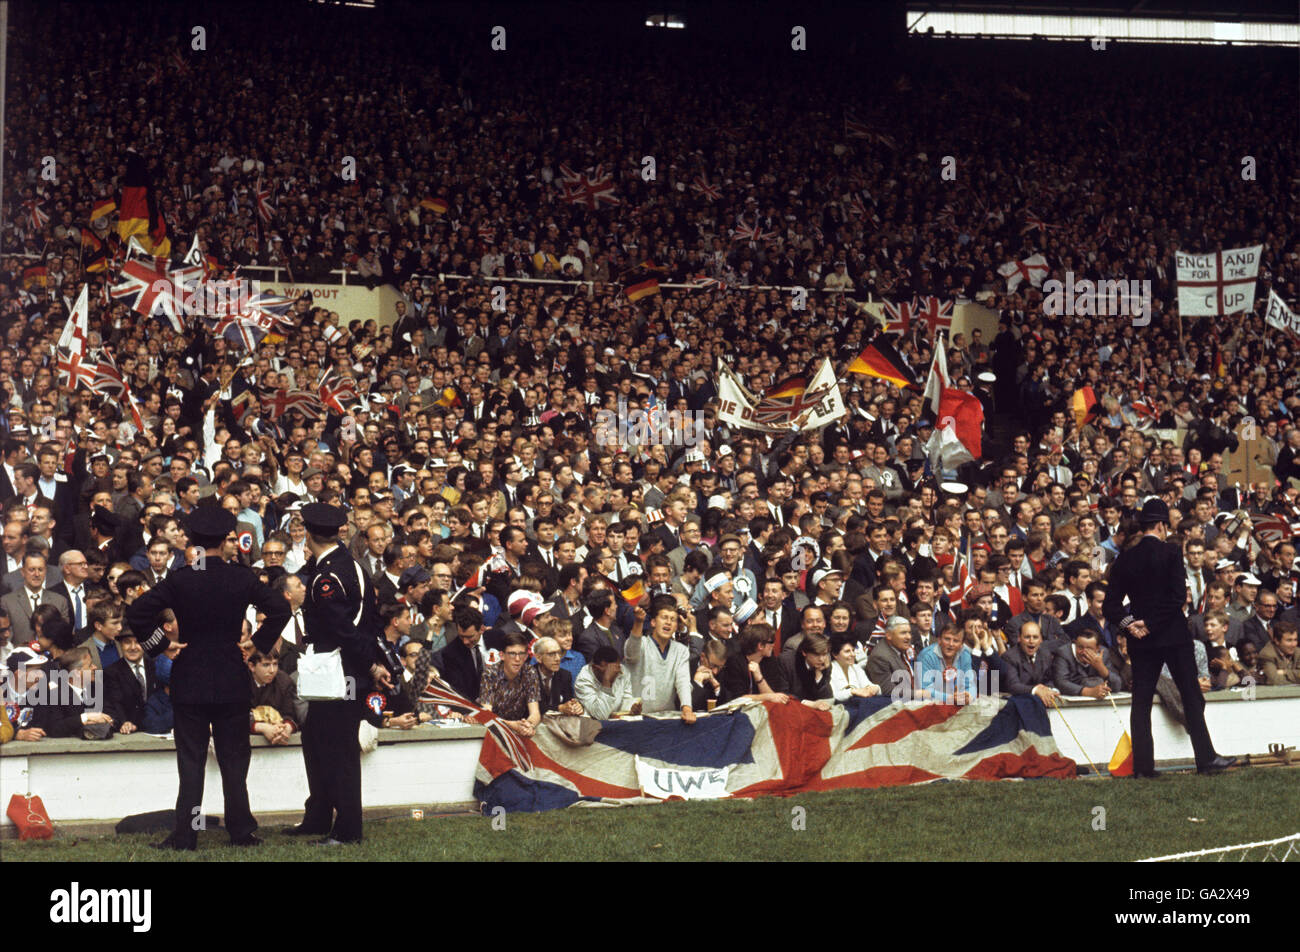 England gegen Westdeutschland - Weltcup-Finale 1966 - Wembley-Stadion. Crowd-Szenen in wembley Stockfoto